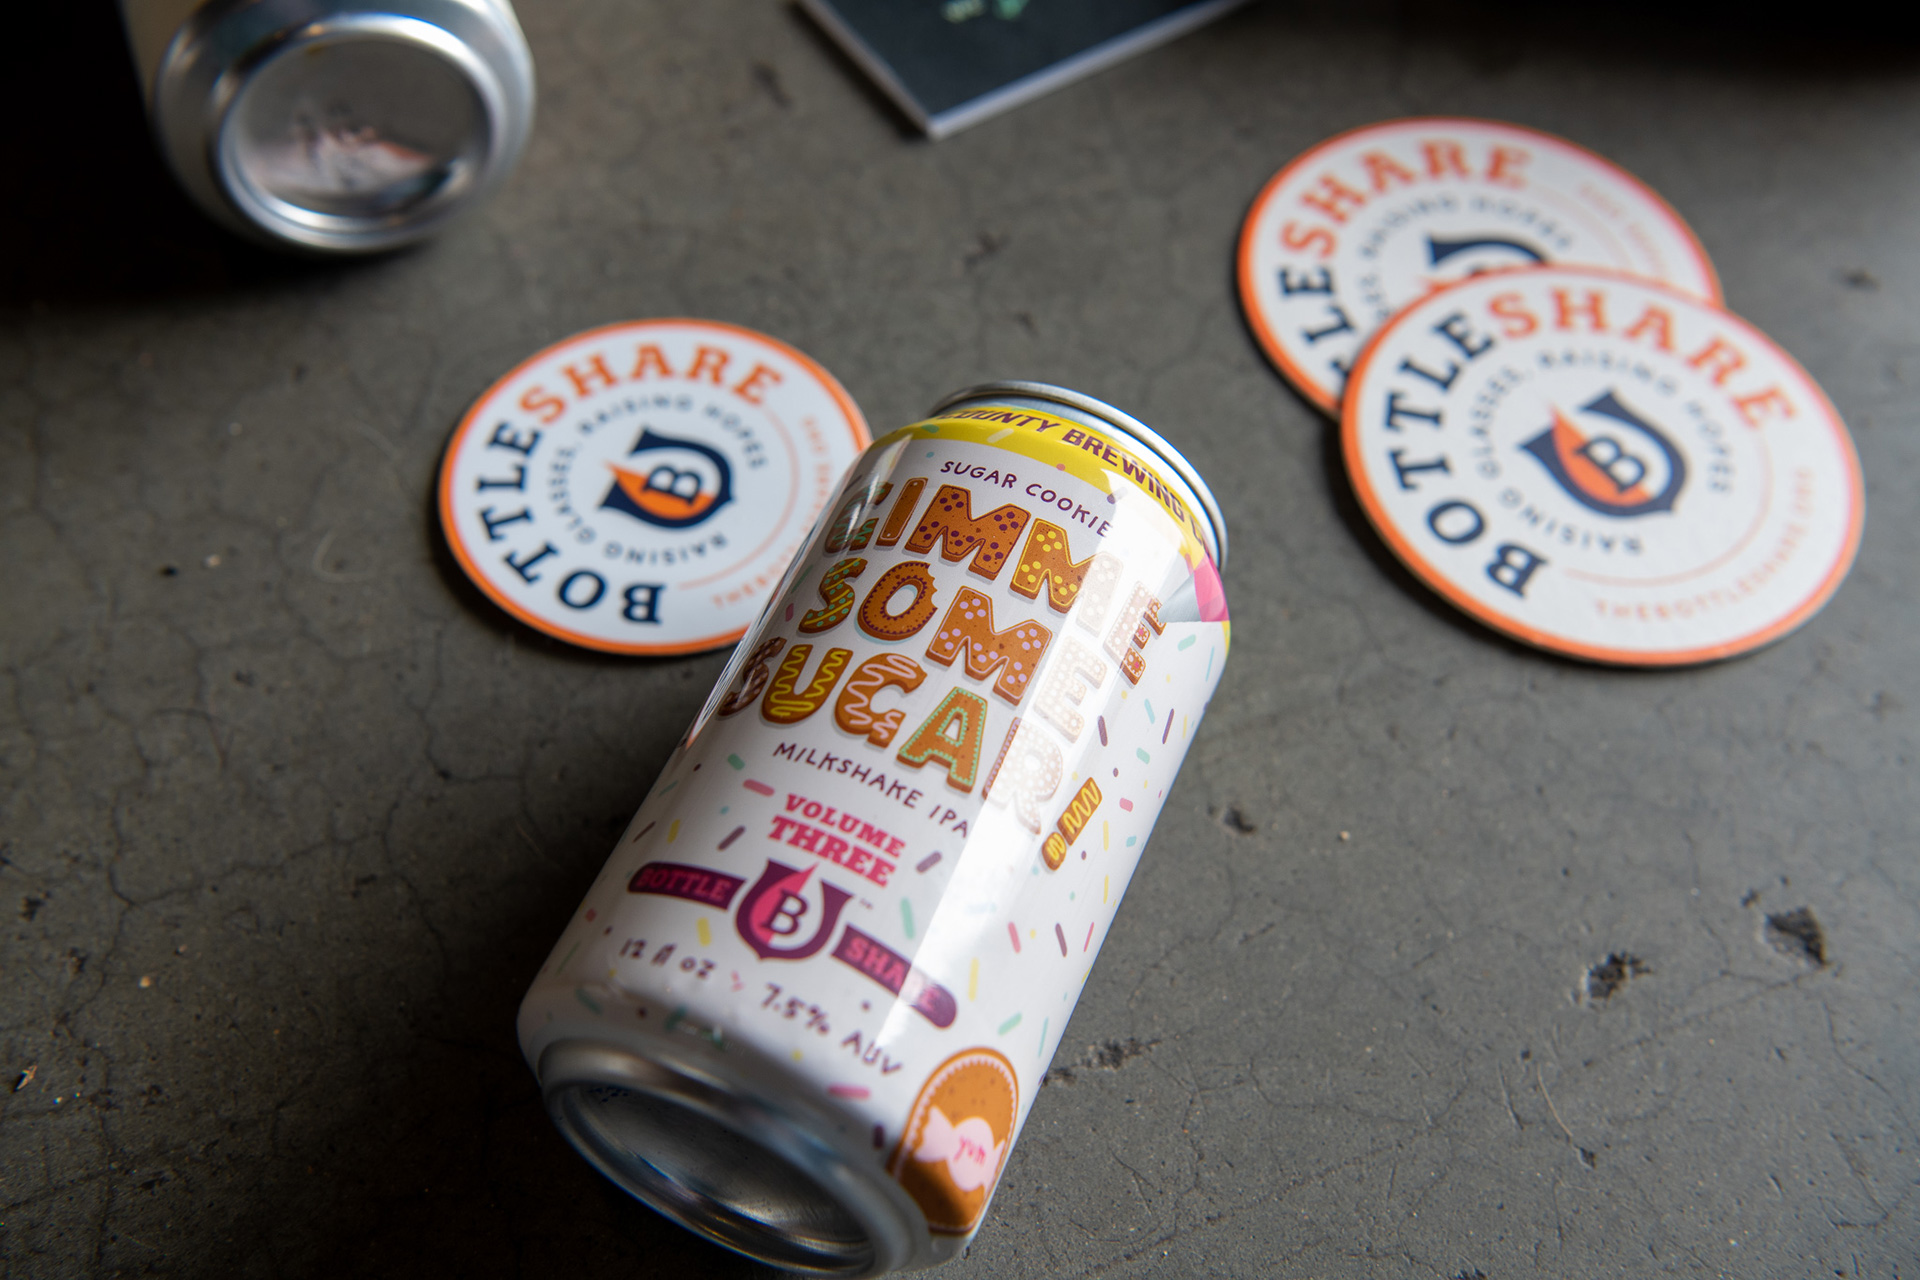 BottleShare craft beer nonprofit branding package design for beer collaborations